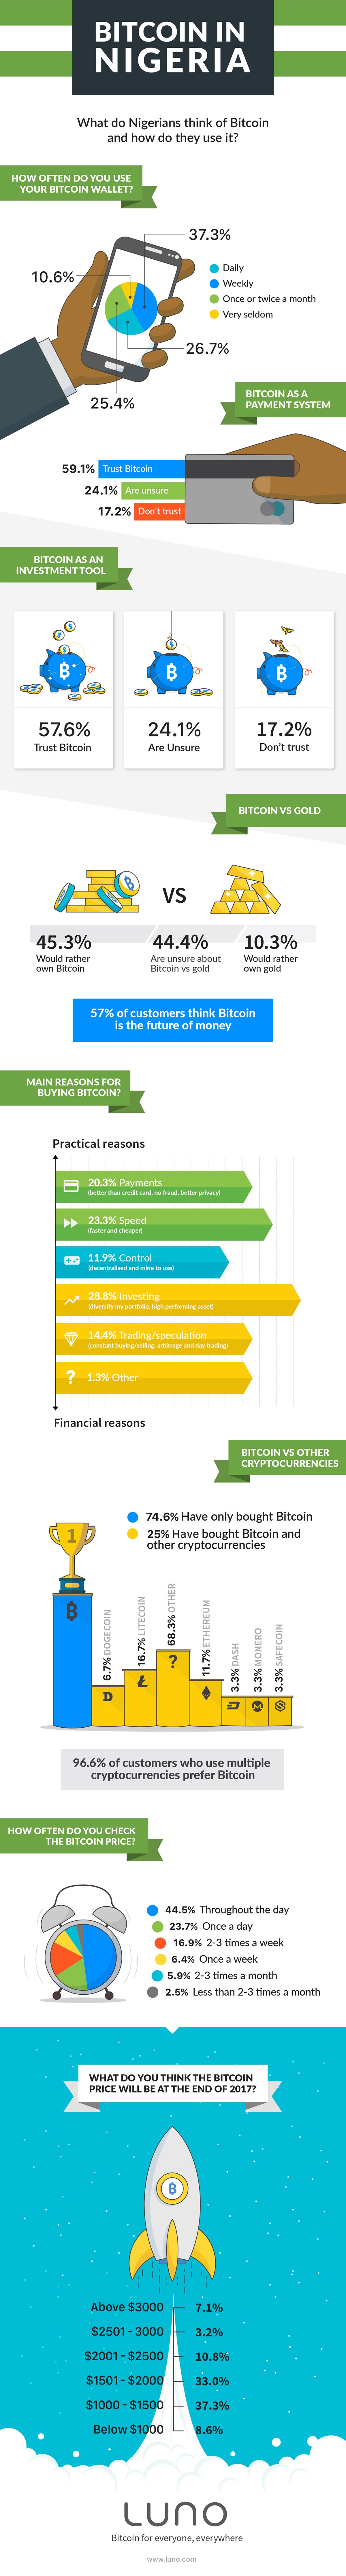 nigeria-use-bitcoin-infographic